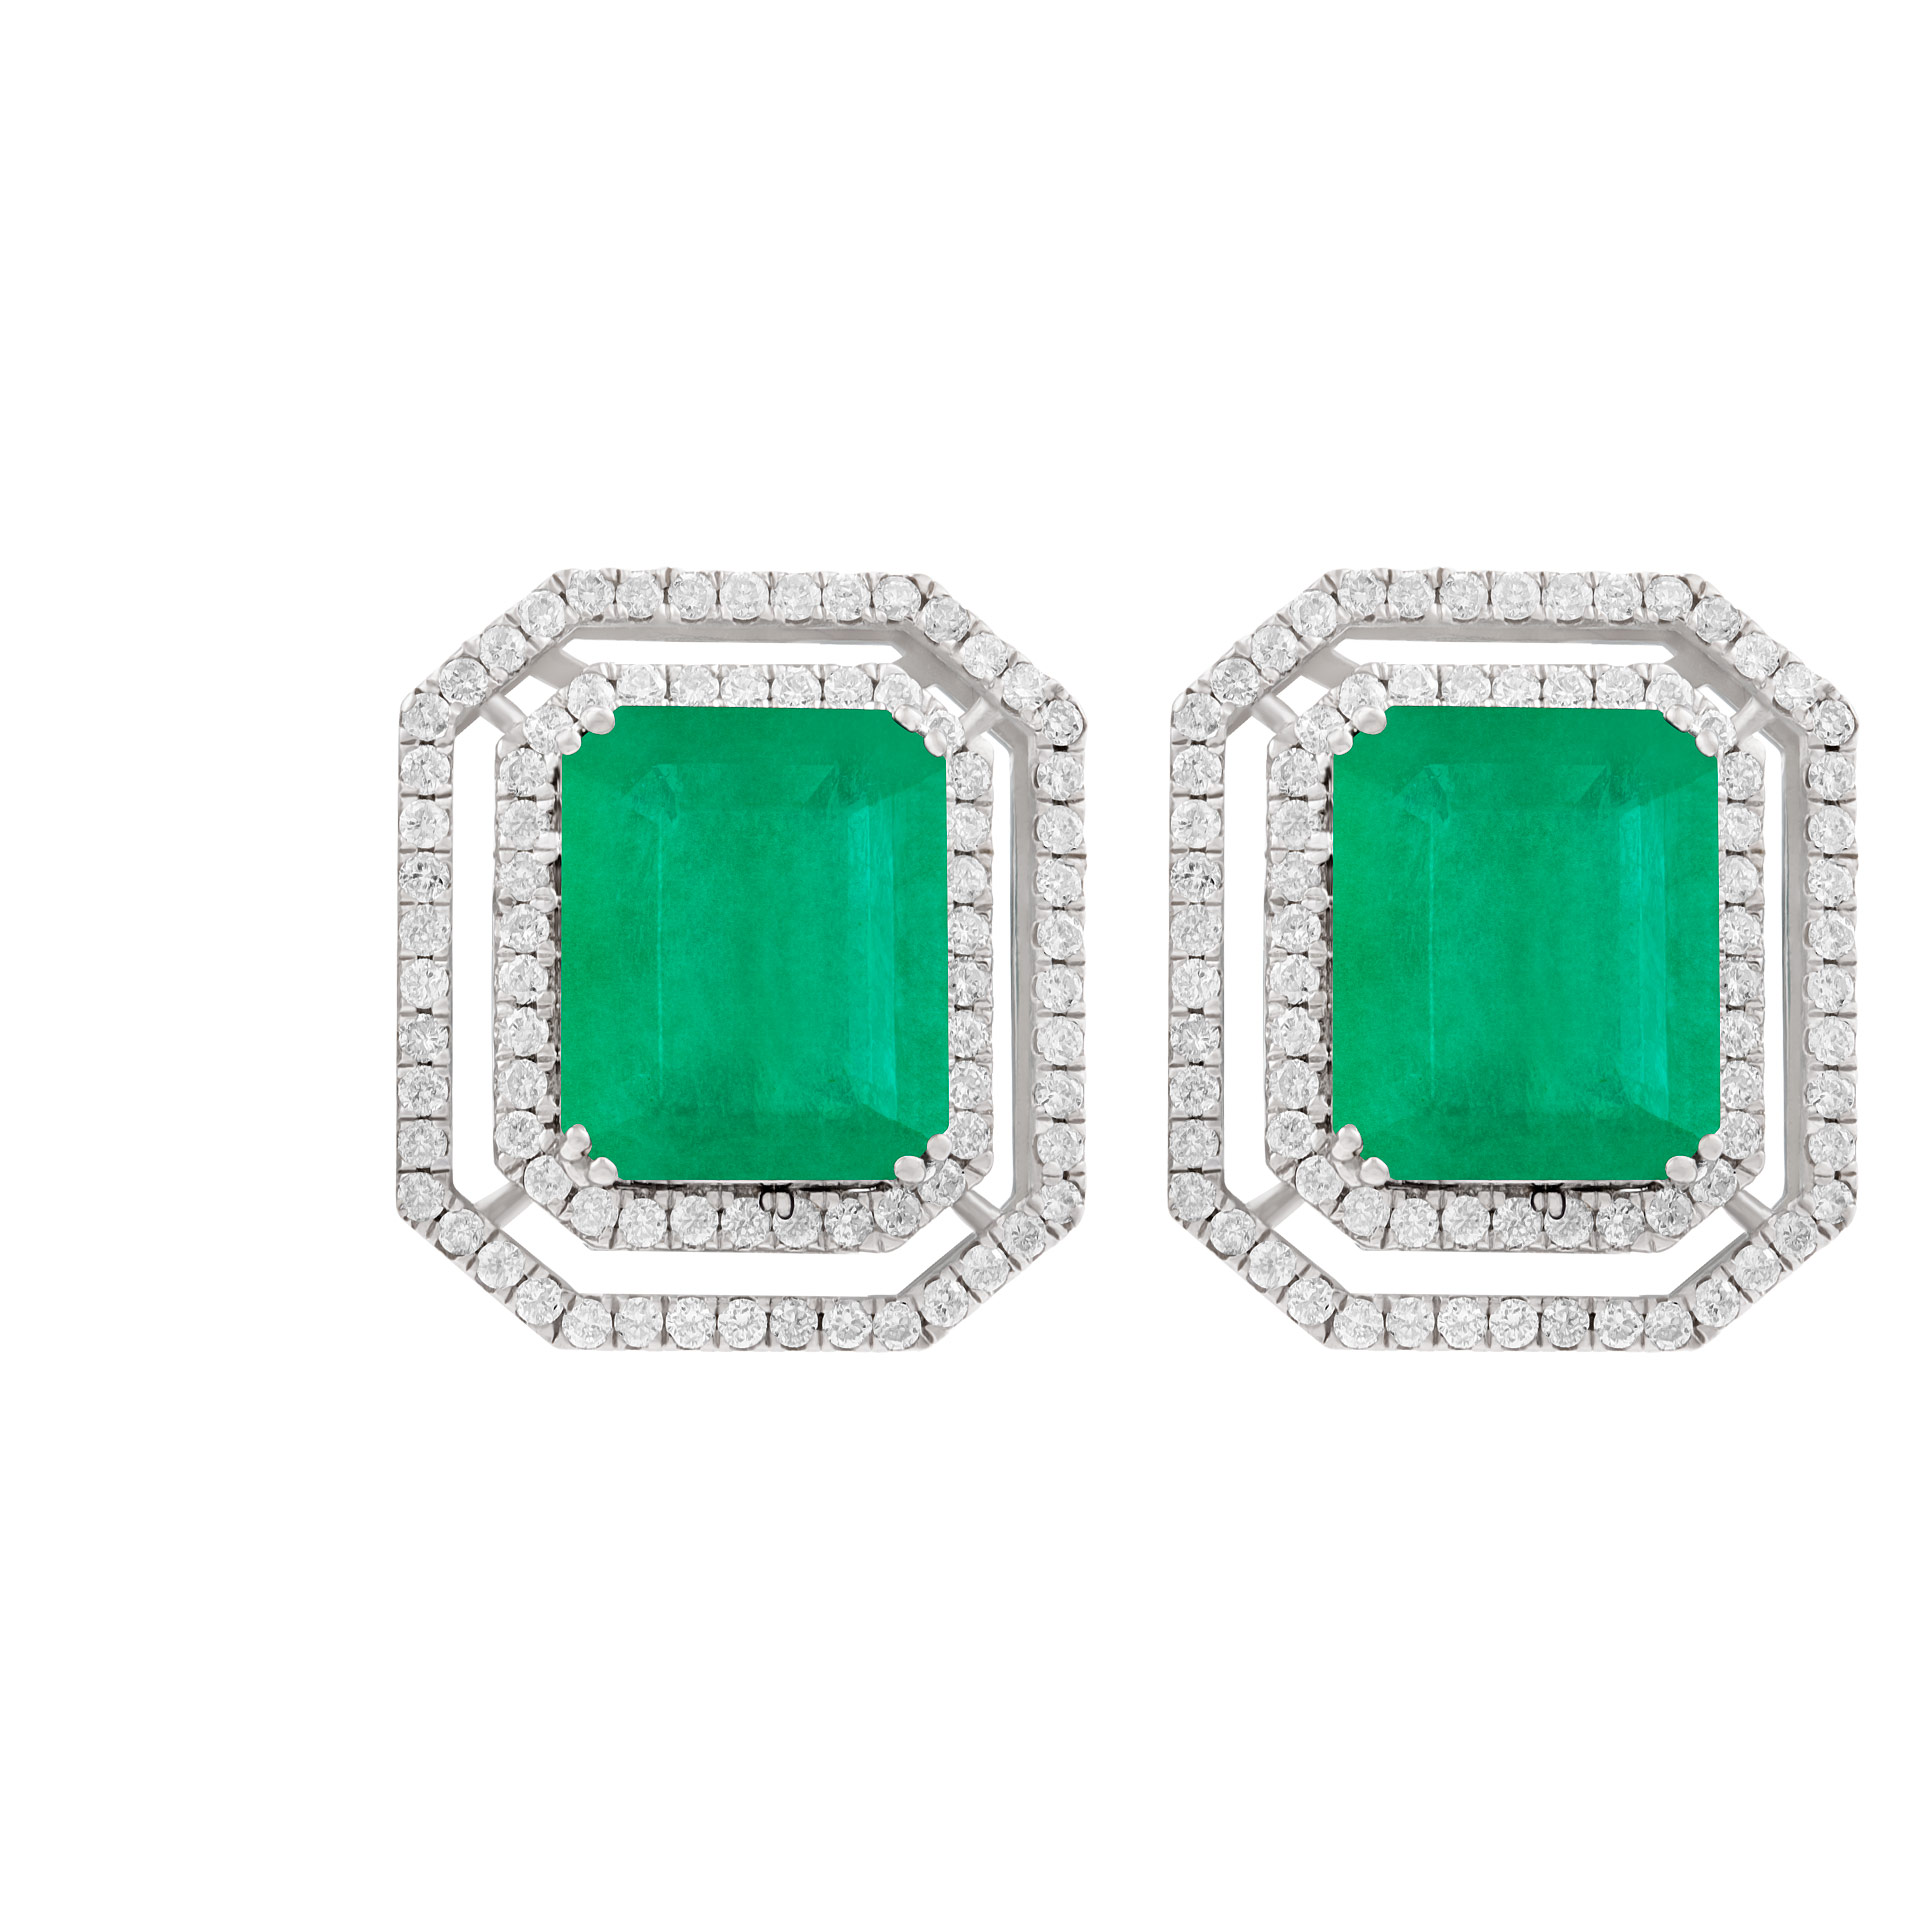 Emerald & diamond earrings in 18k white gold